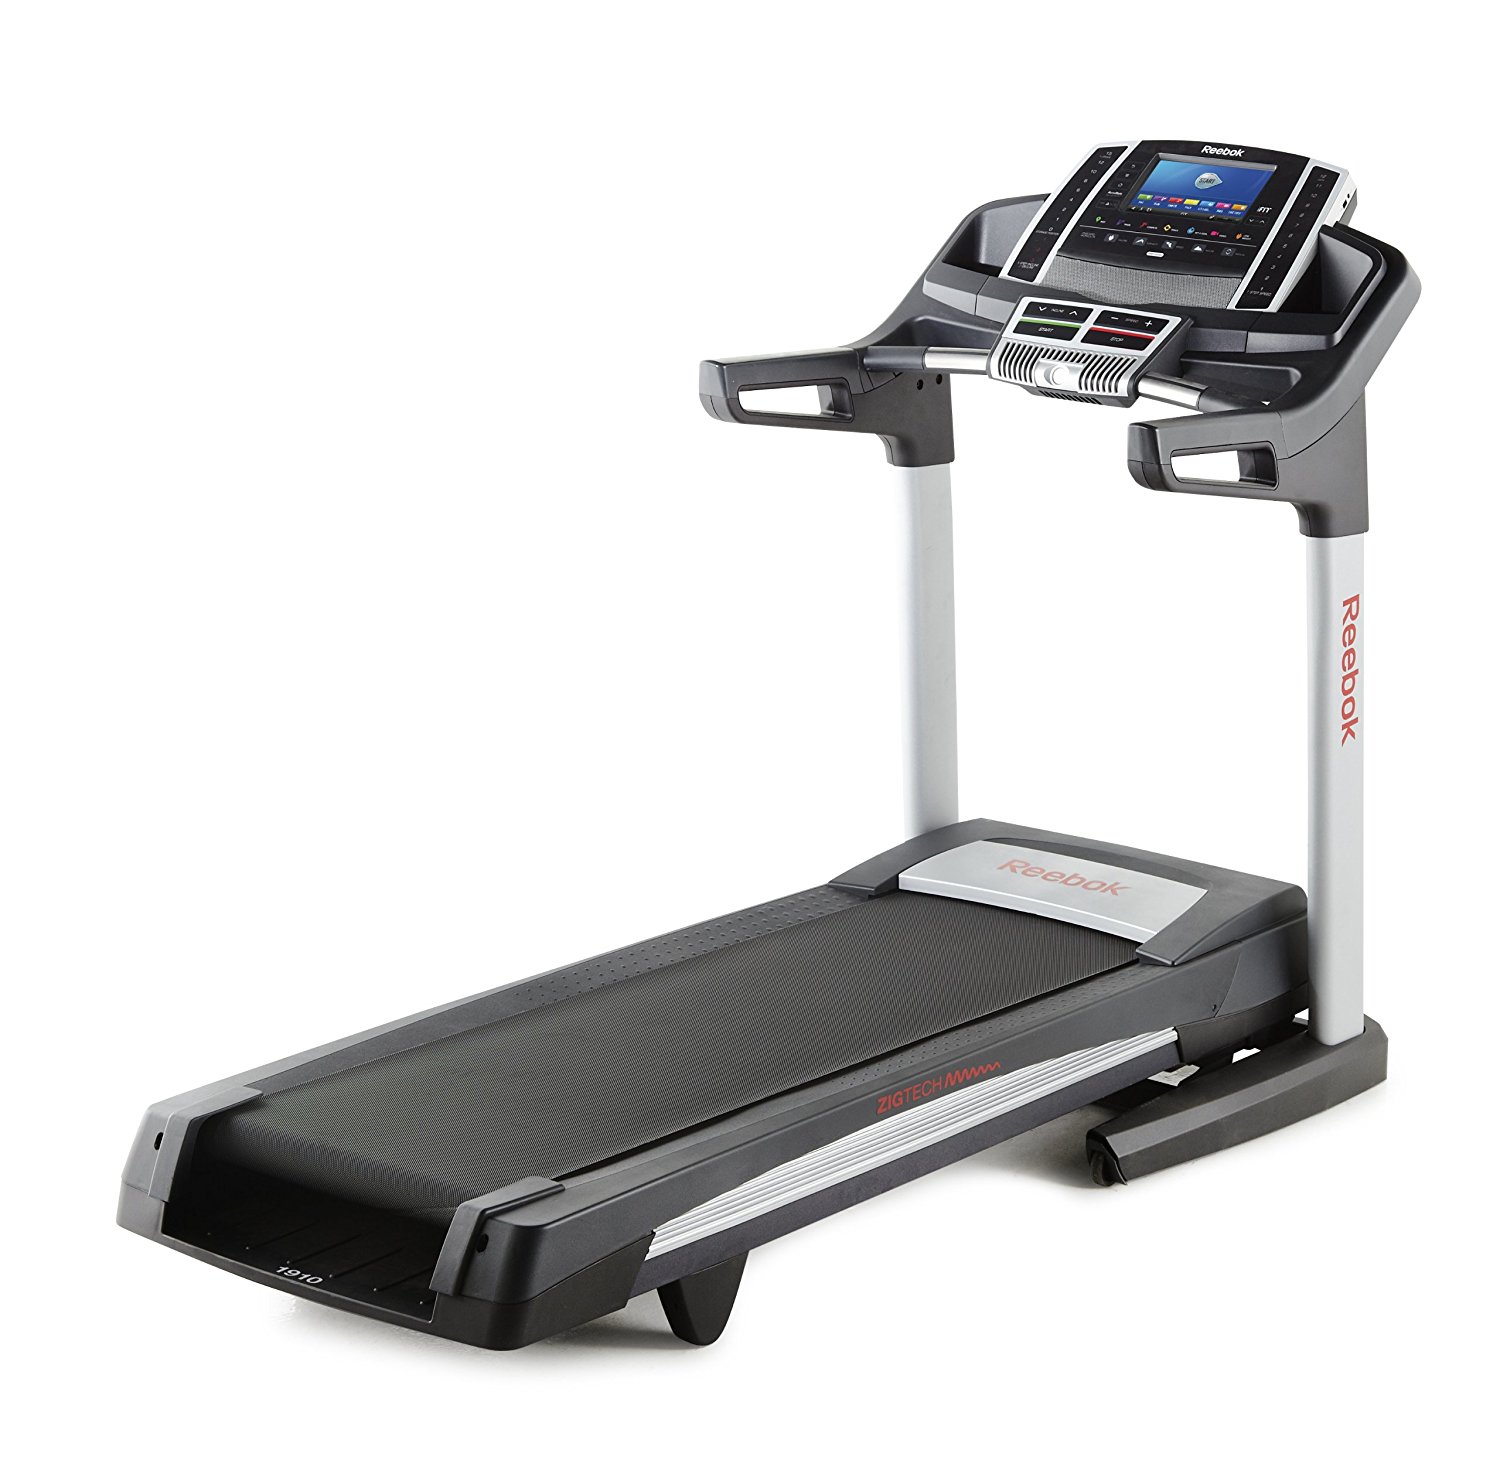 The Reebok VISTA 8500 Treadmill 